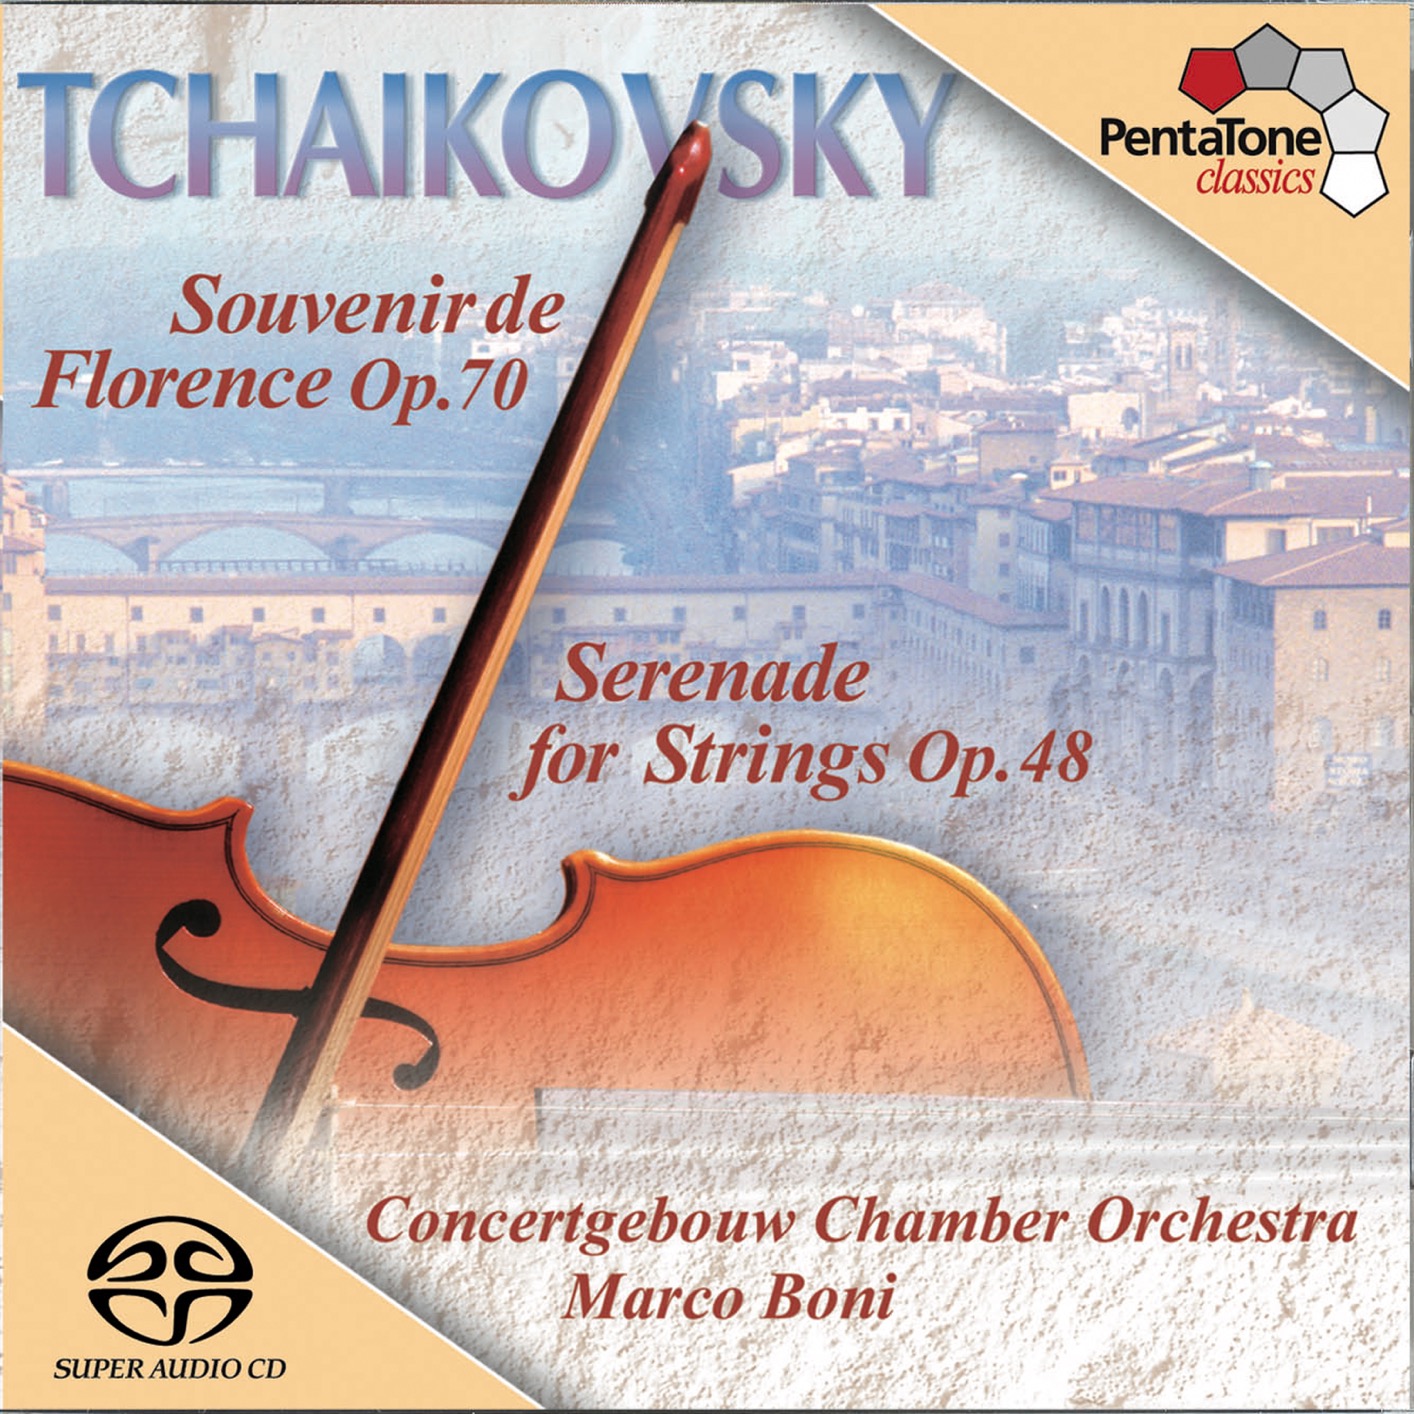 Marco Boni & Concertgebouw Chamber Orchestra - Tchaikovsky: Serenade for Strings / Souvenir De Florence (2002/2018) [FLAC 24bit/96kHz]